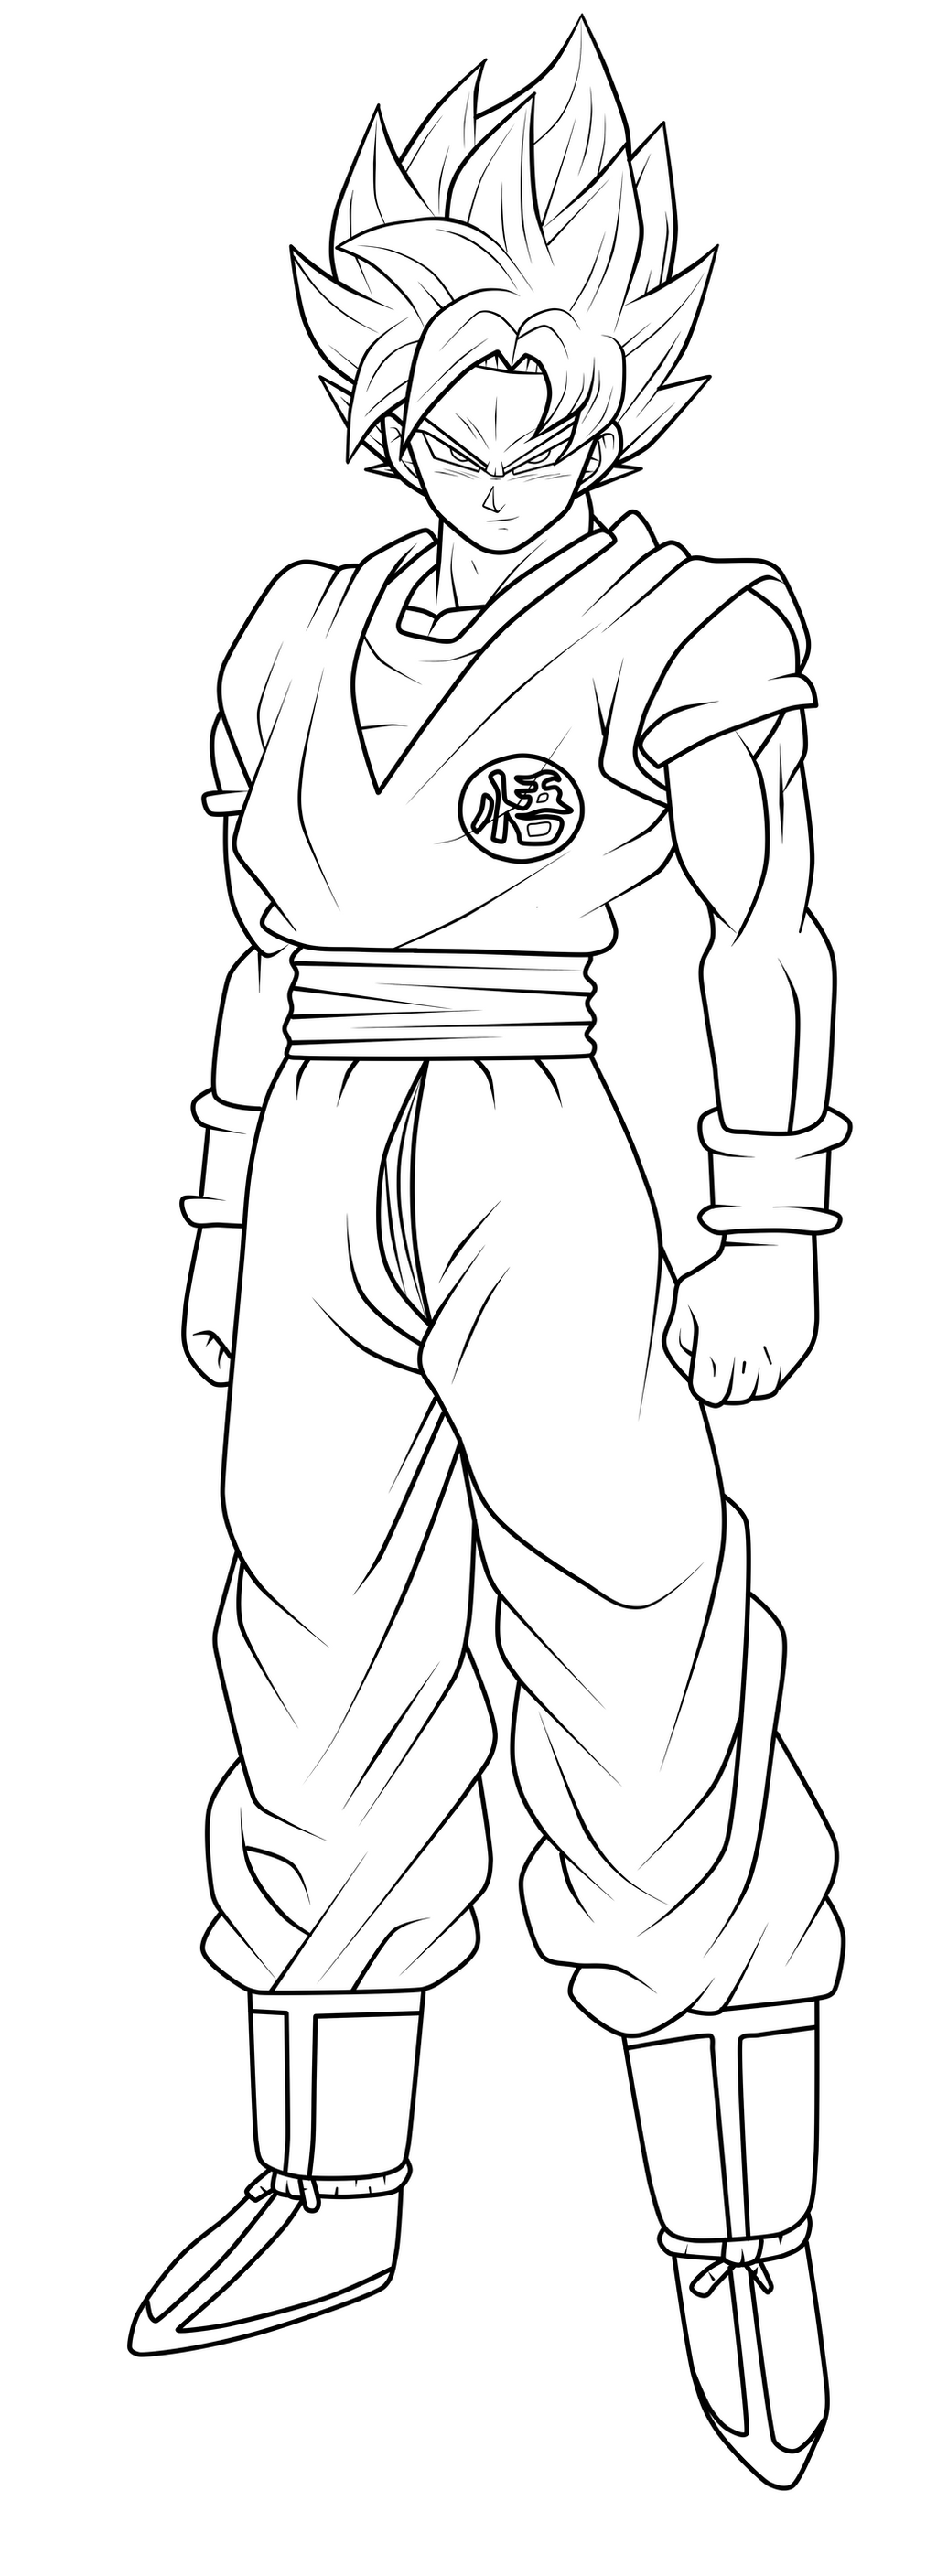 Goku Super Saiyan Blue Lineart by ChronoFz on DeviantArt